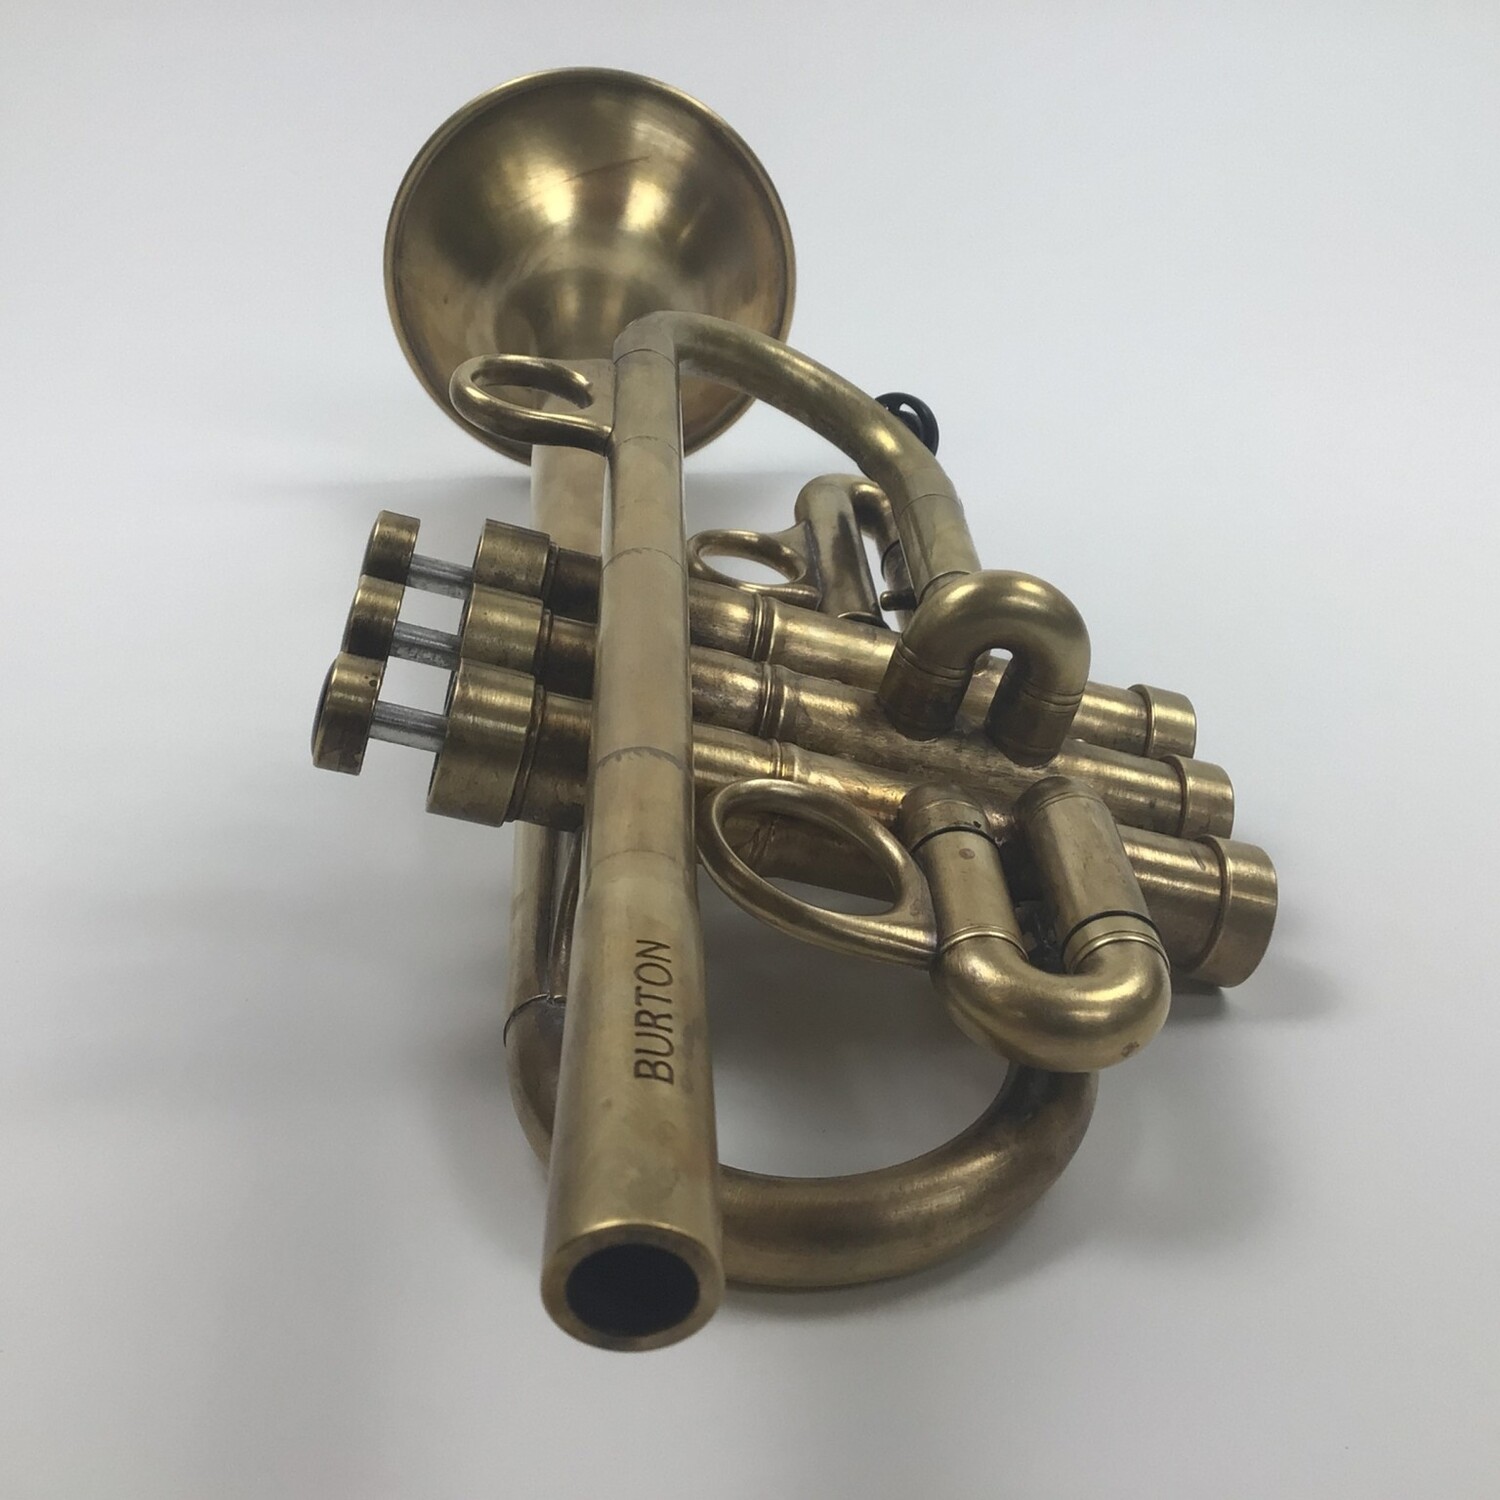 Model Comparison - Harrelson Trumpets